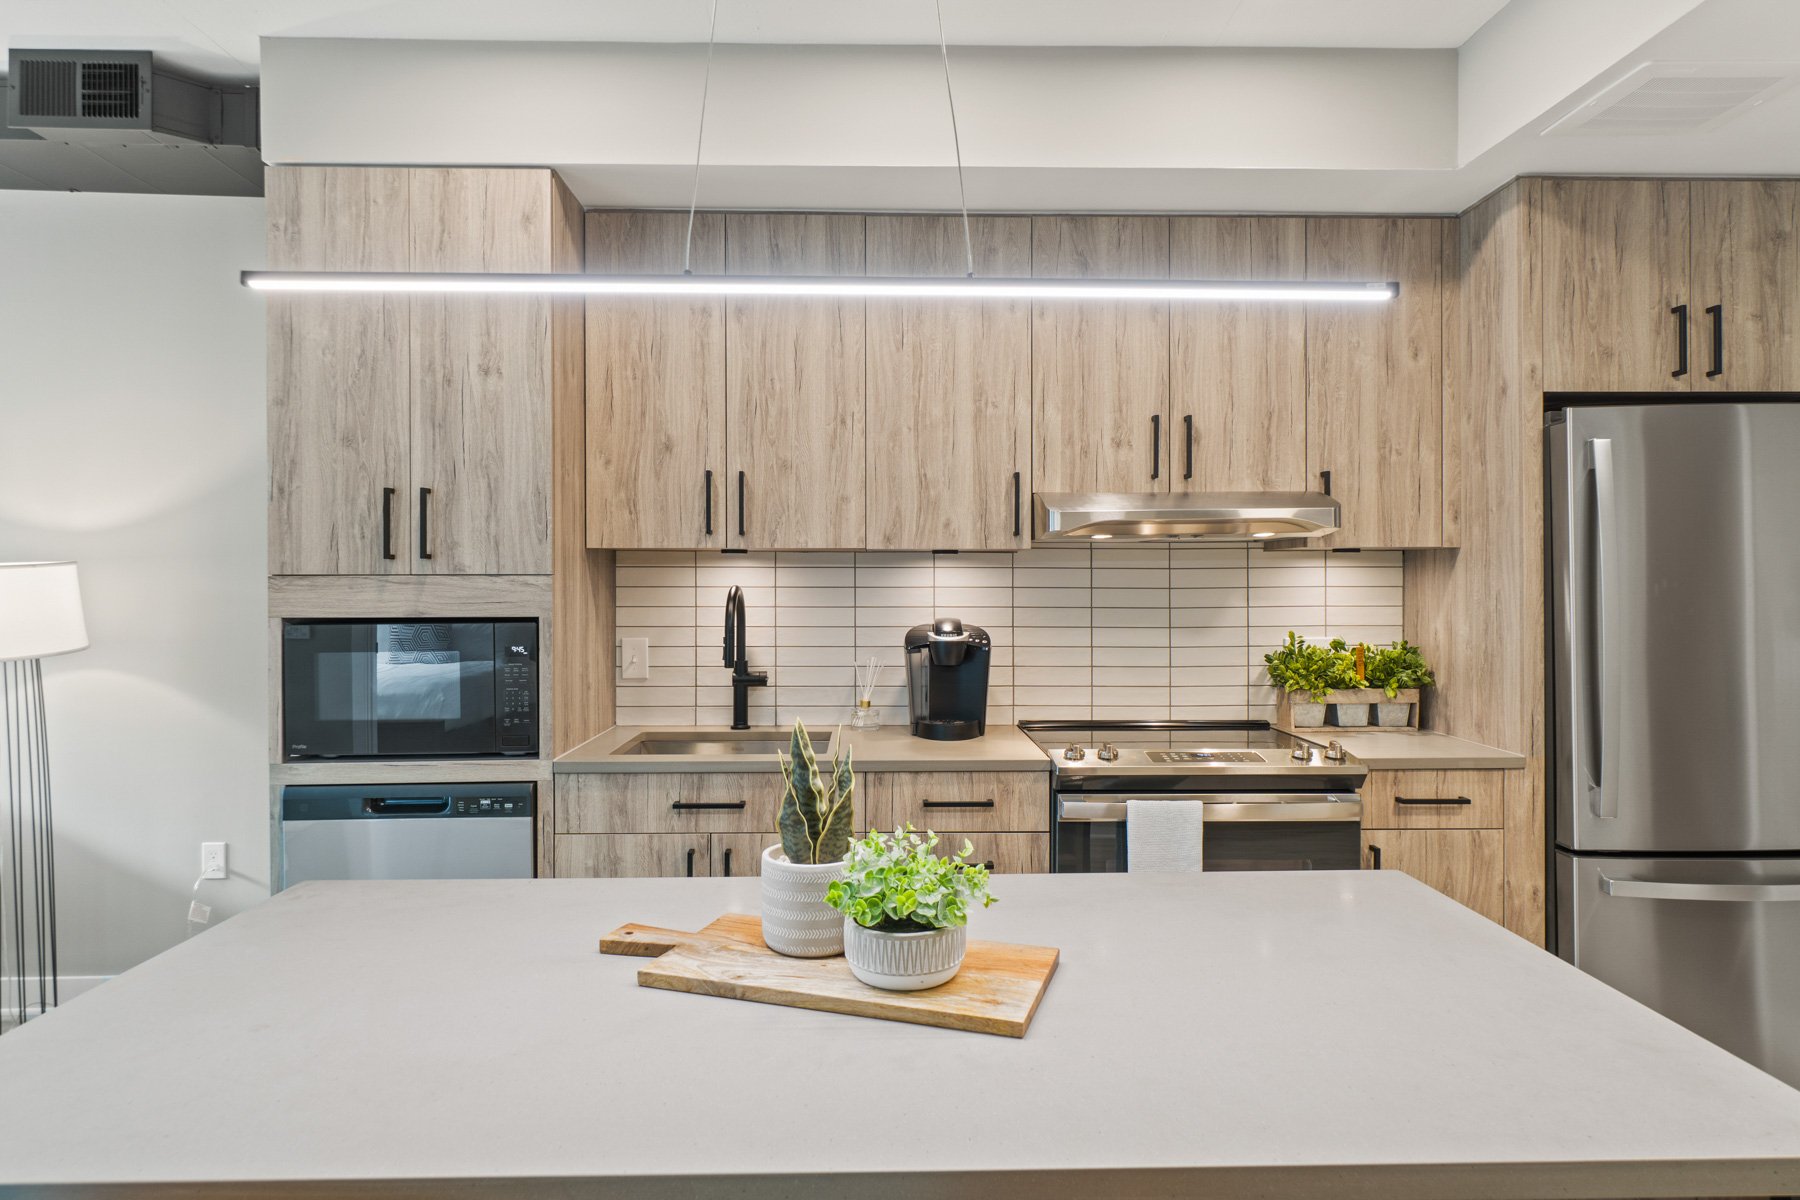 Sleek kitchen with stainless steel appliances.